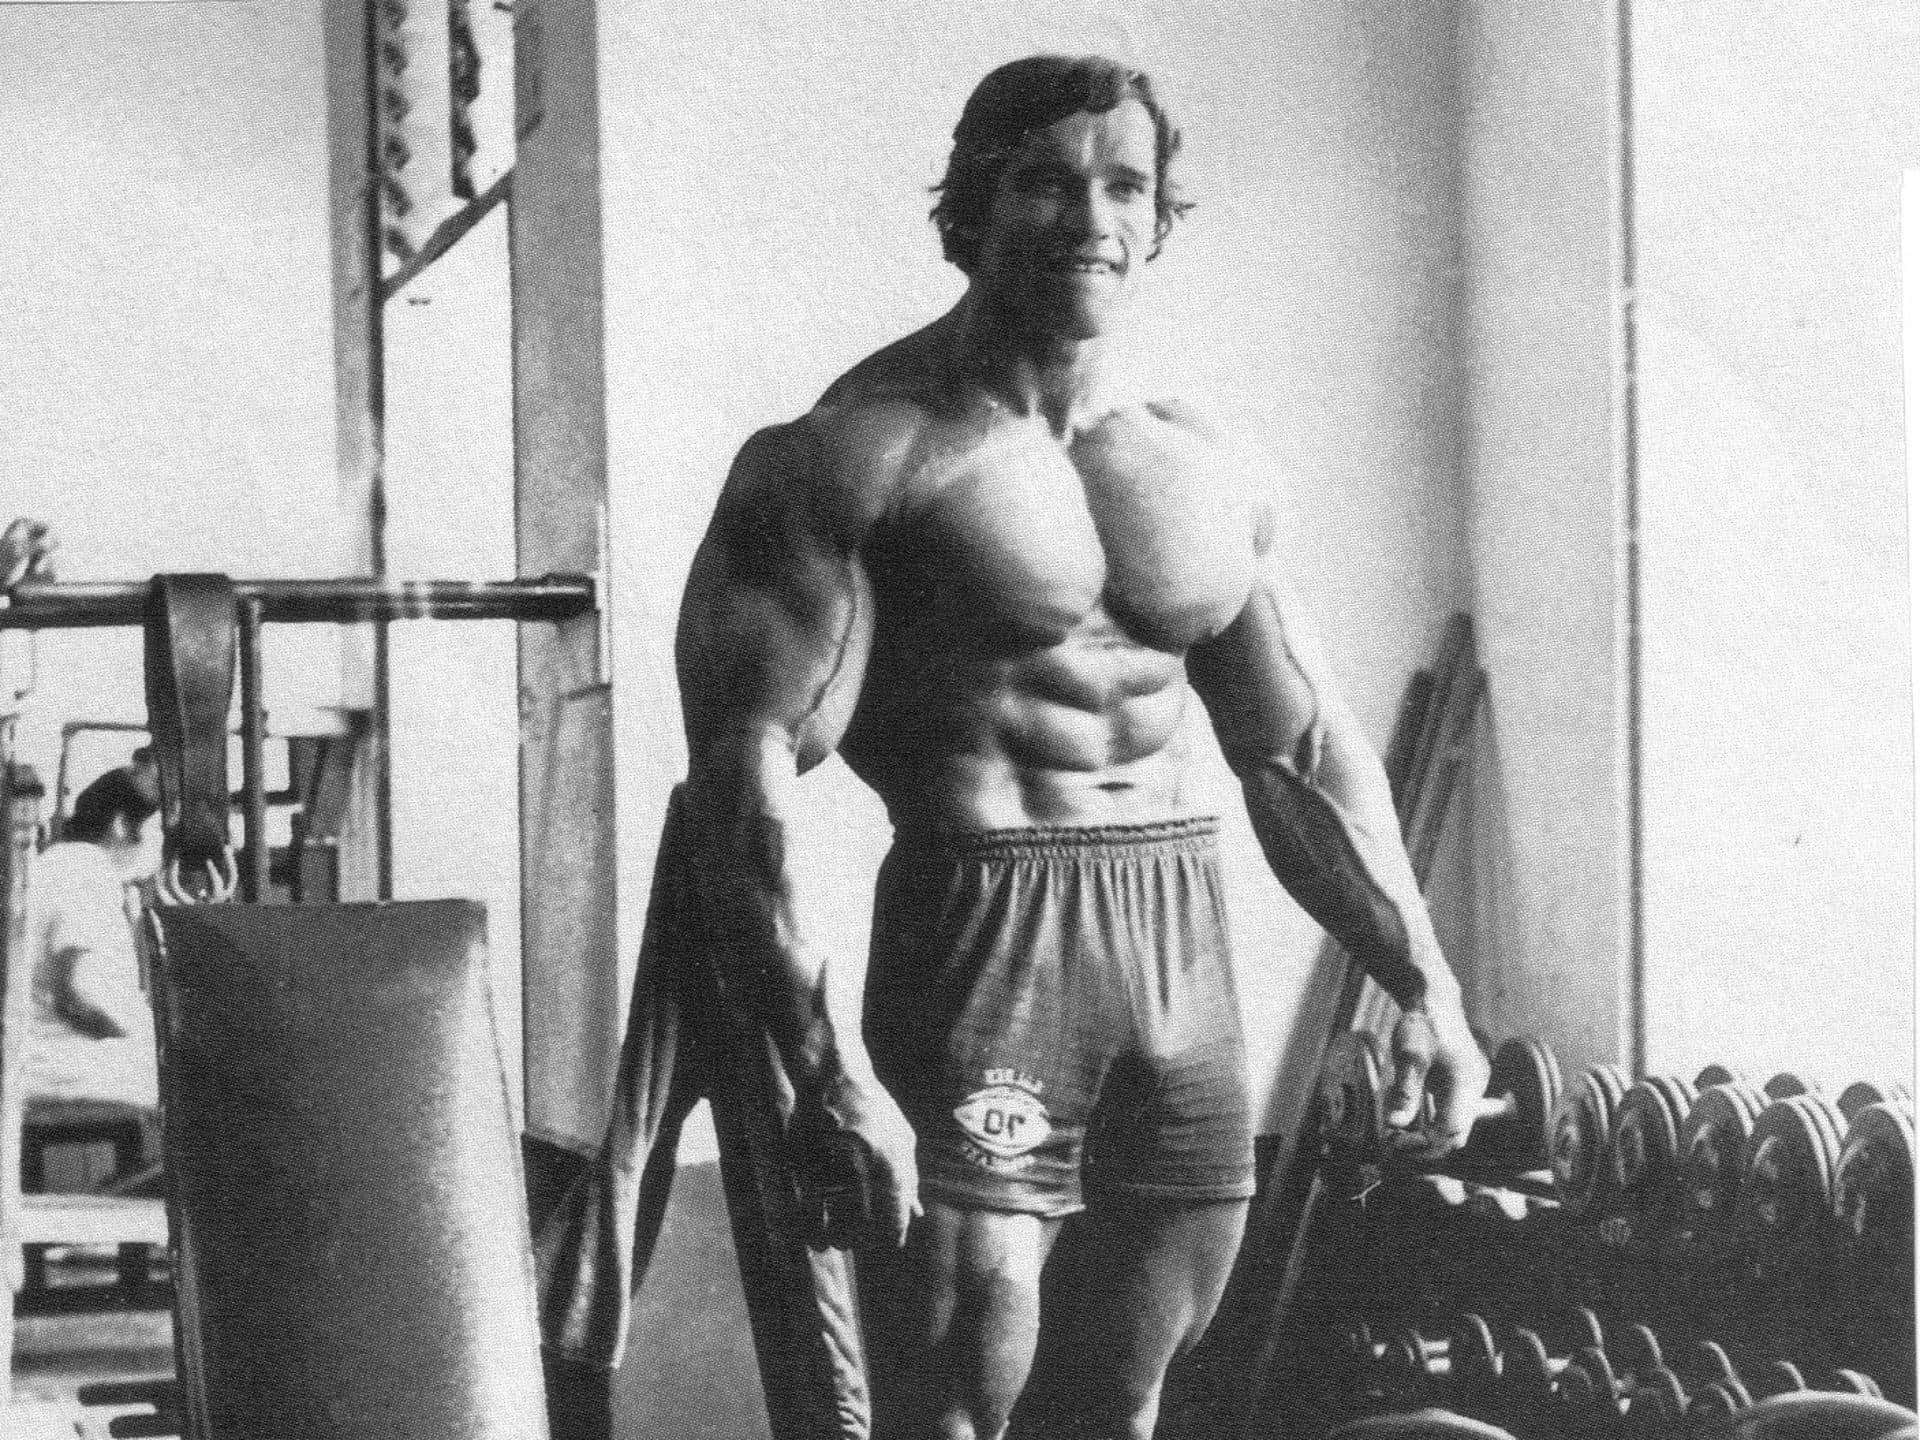 "#HallOfFame: Arnold Schwarzenegger Defines True Strength"